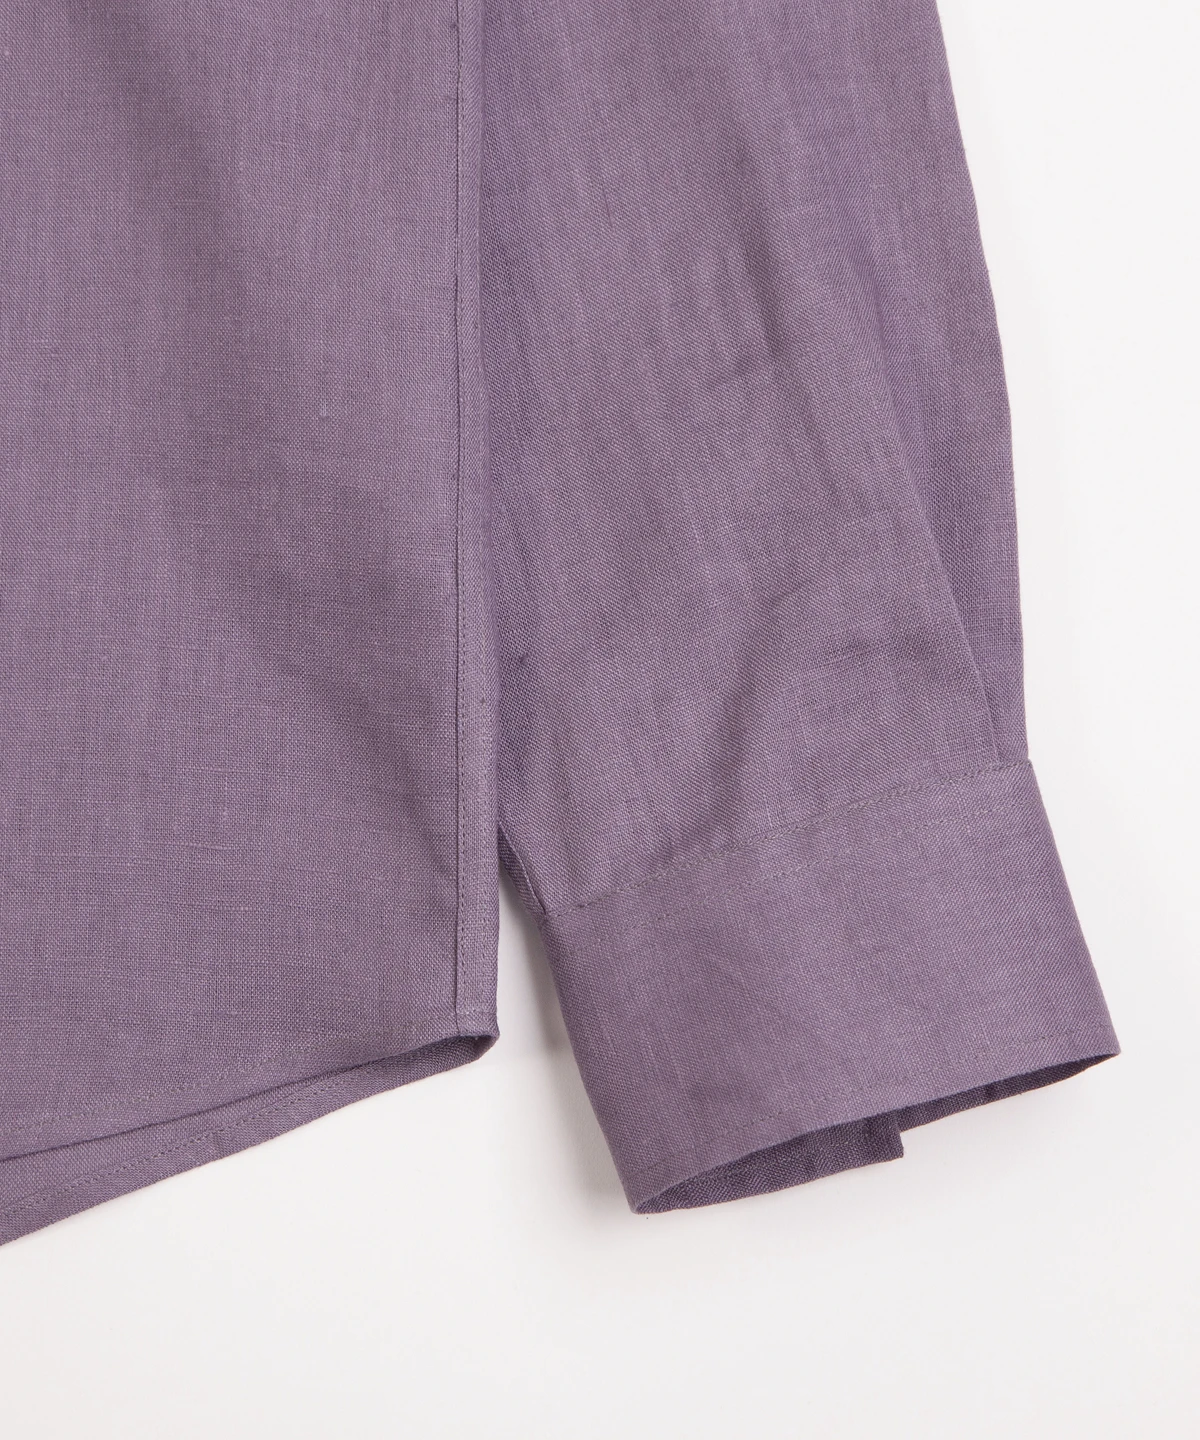 grindlondon linen long sleeve shirt old lavender